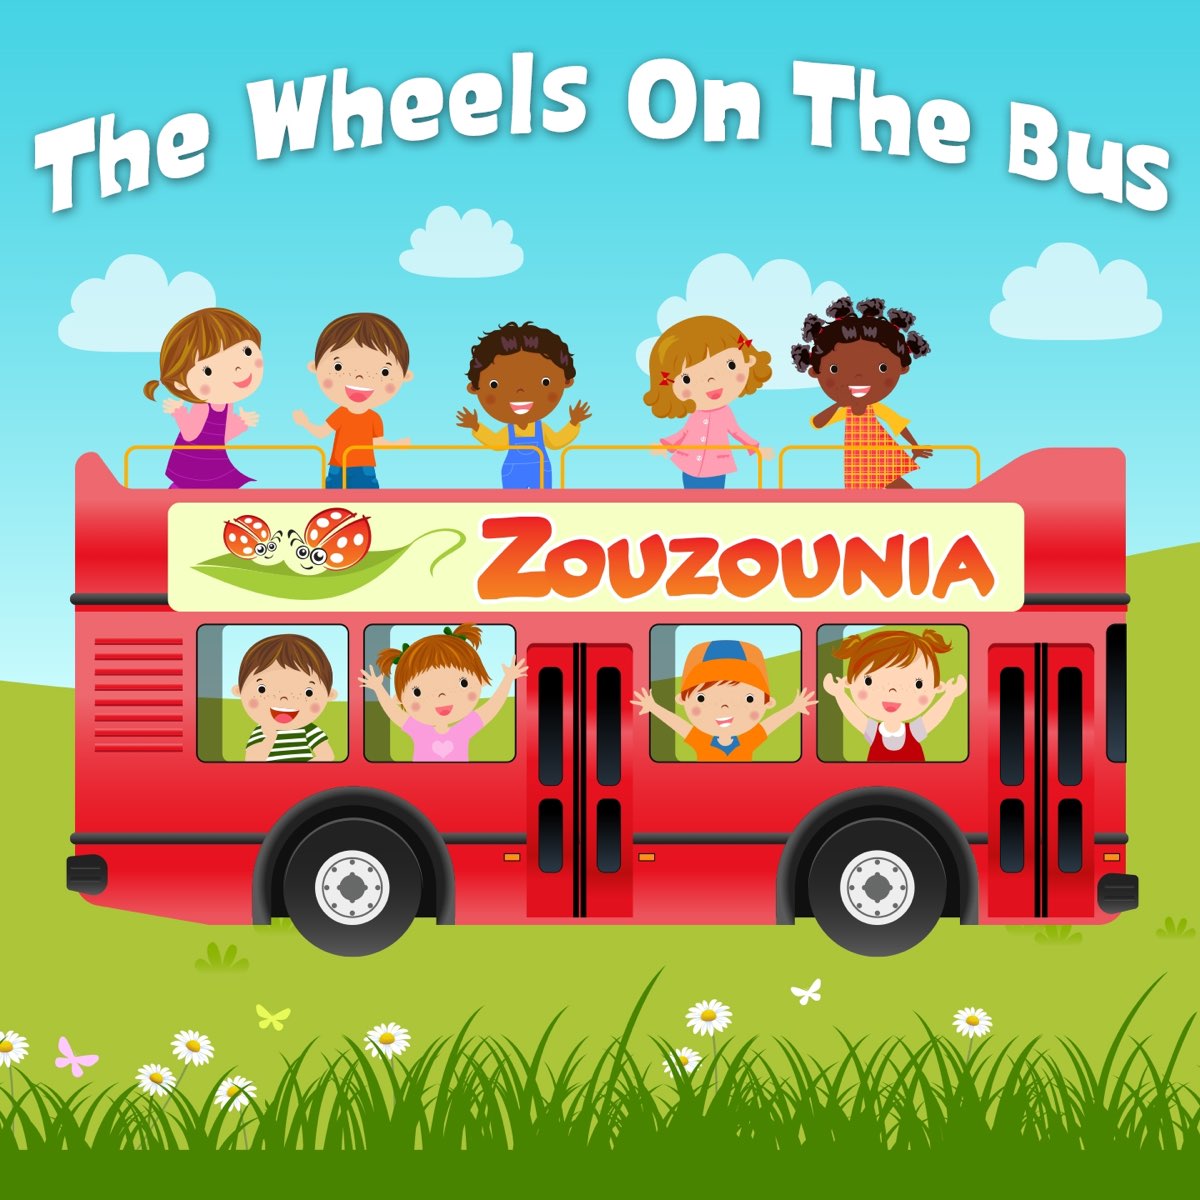 The Wheels on the Bus. The Wheels on the Bus Song. Bus. The Wheels on the Bus 3d Nursery Rhymes children Songs картинки. Busing песни